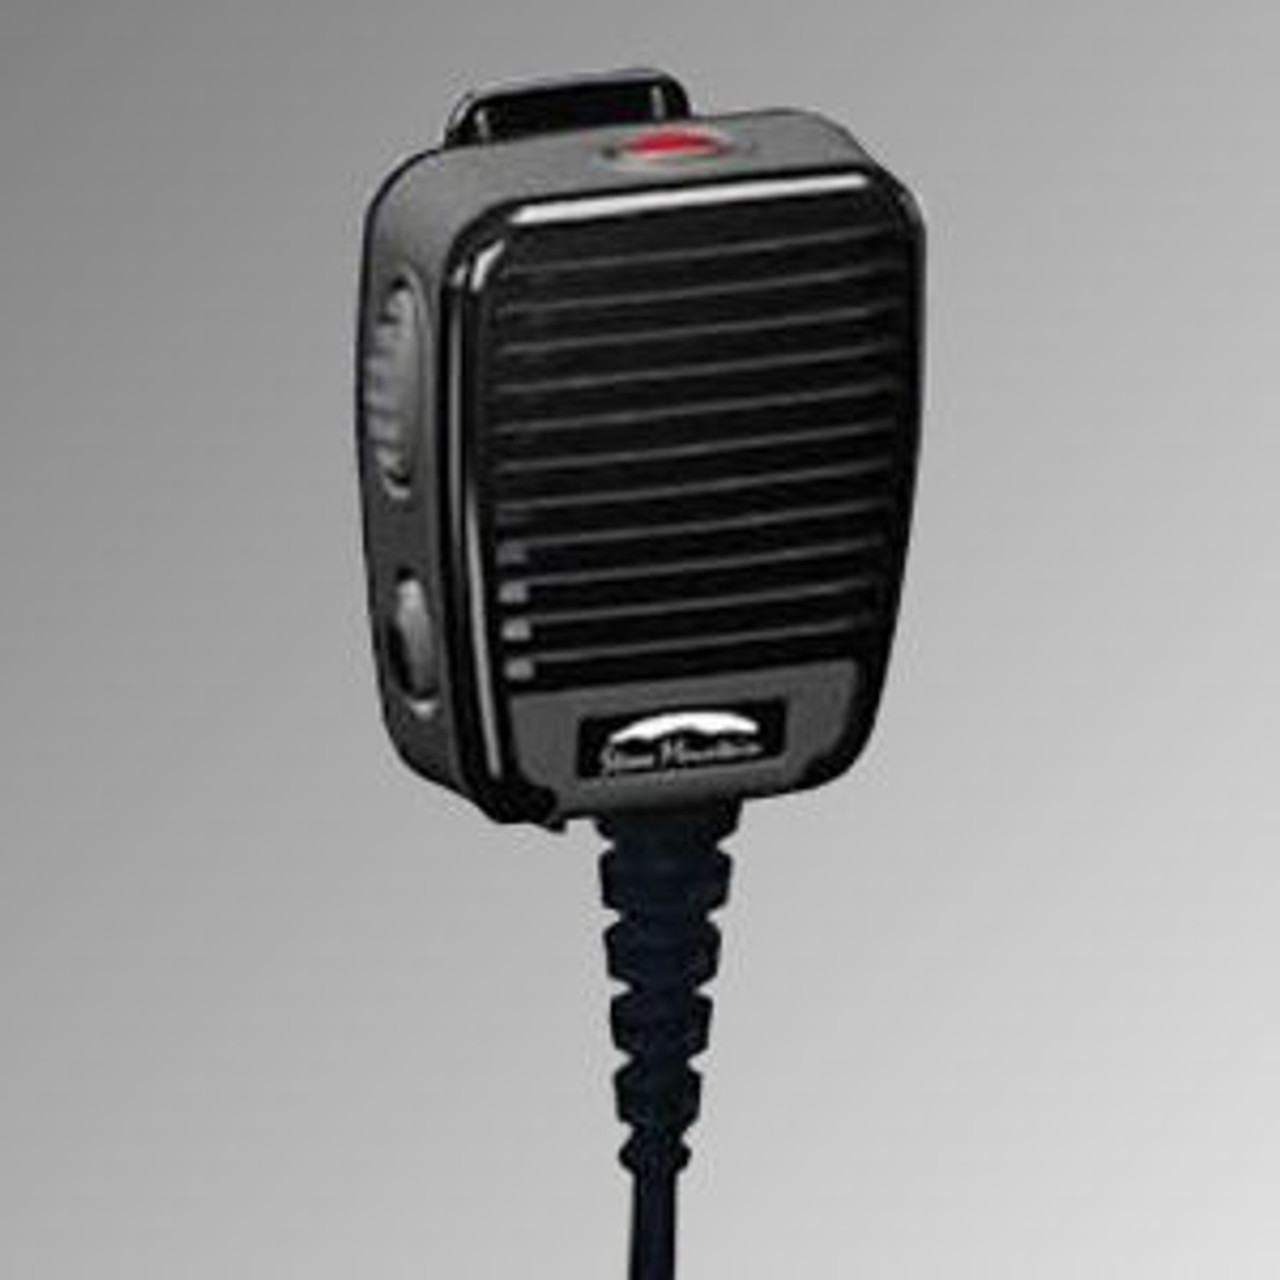 Harris XG-25 Ruggedized Waterproof IP68 High Volume Speaker Mic